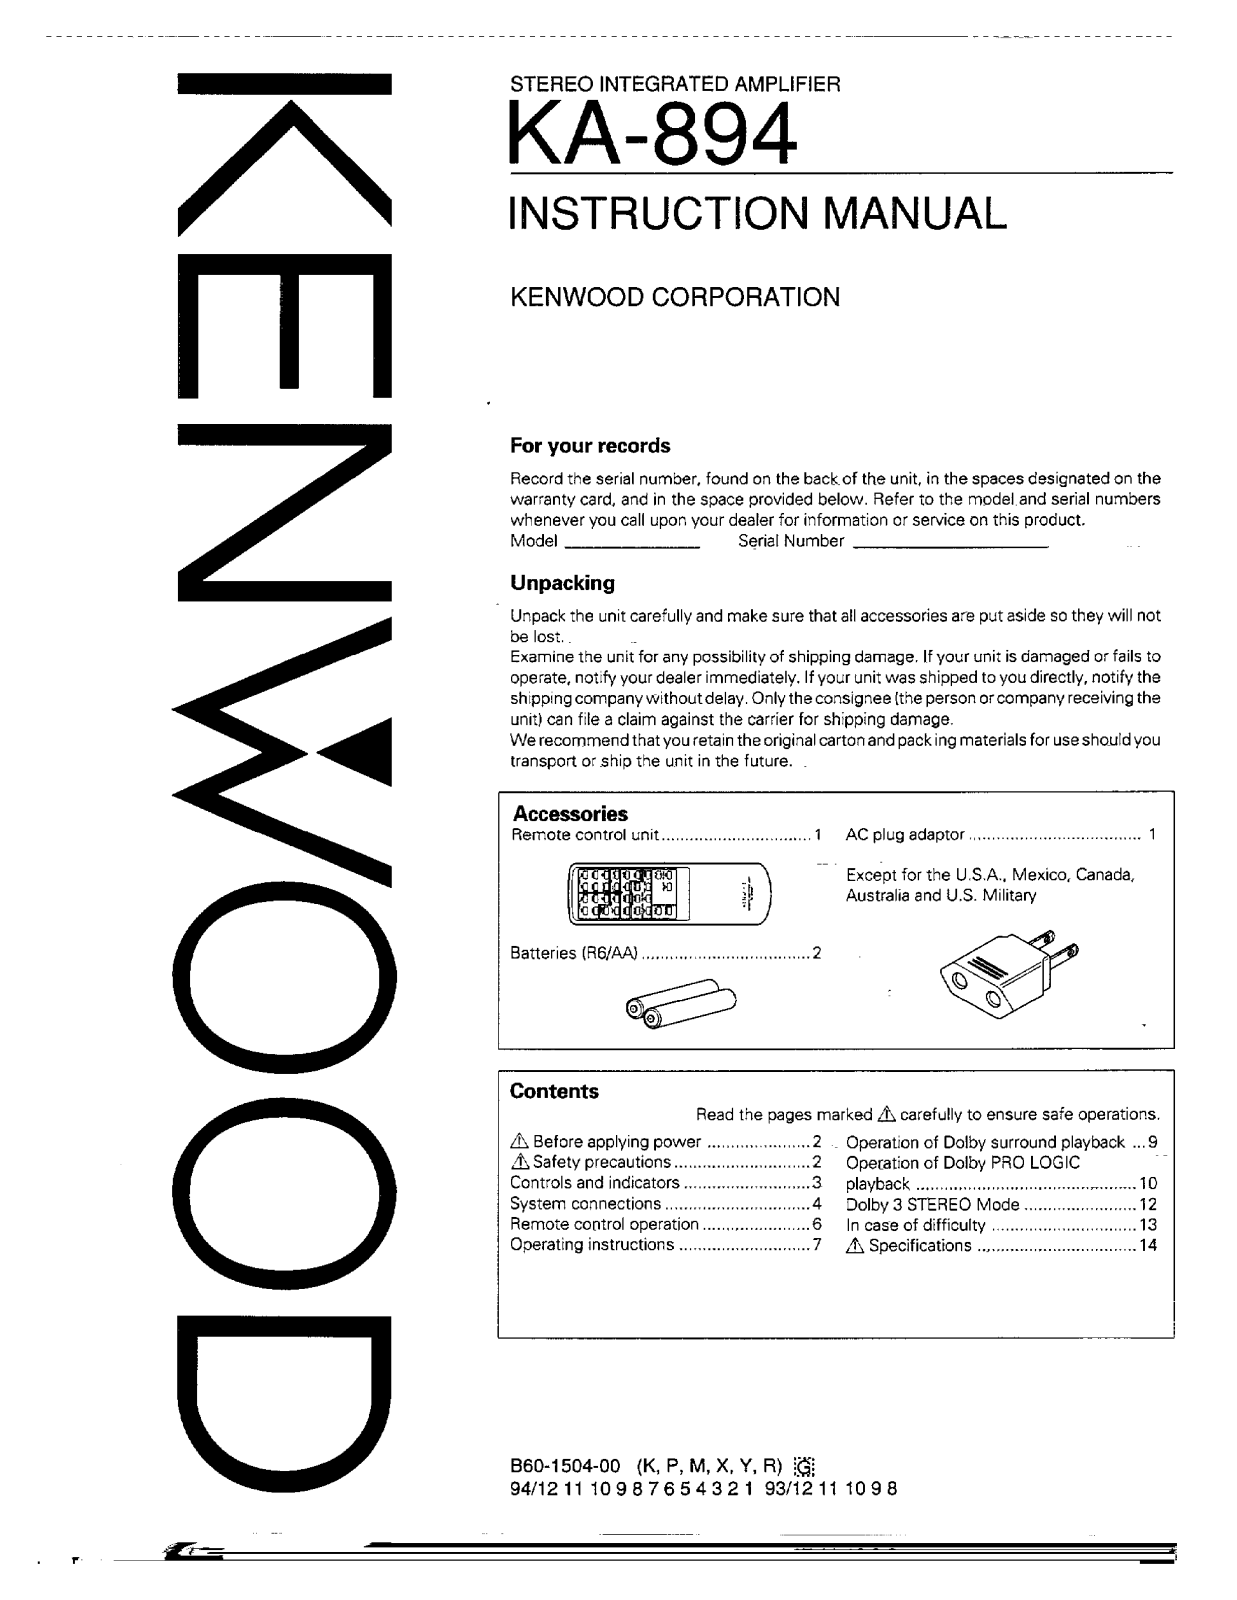 Kenwood KA-894 Owner's Manual